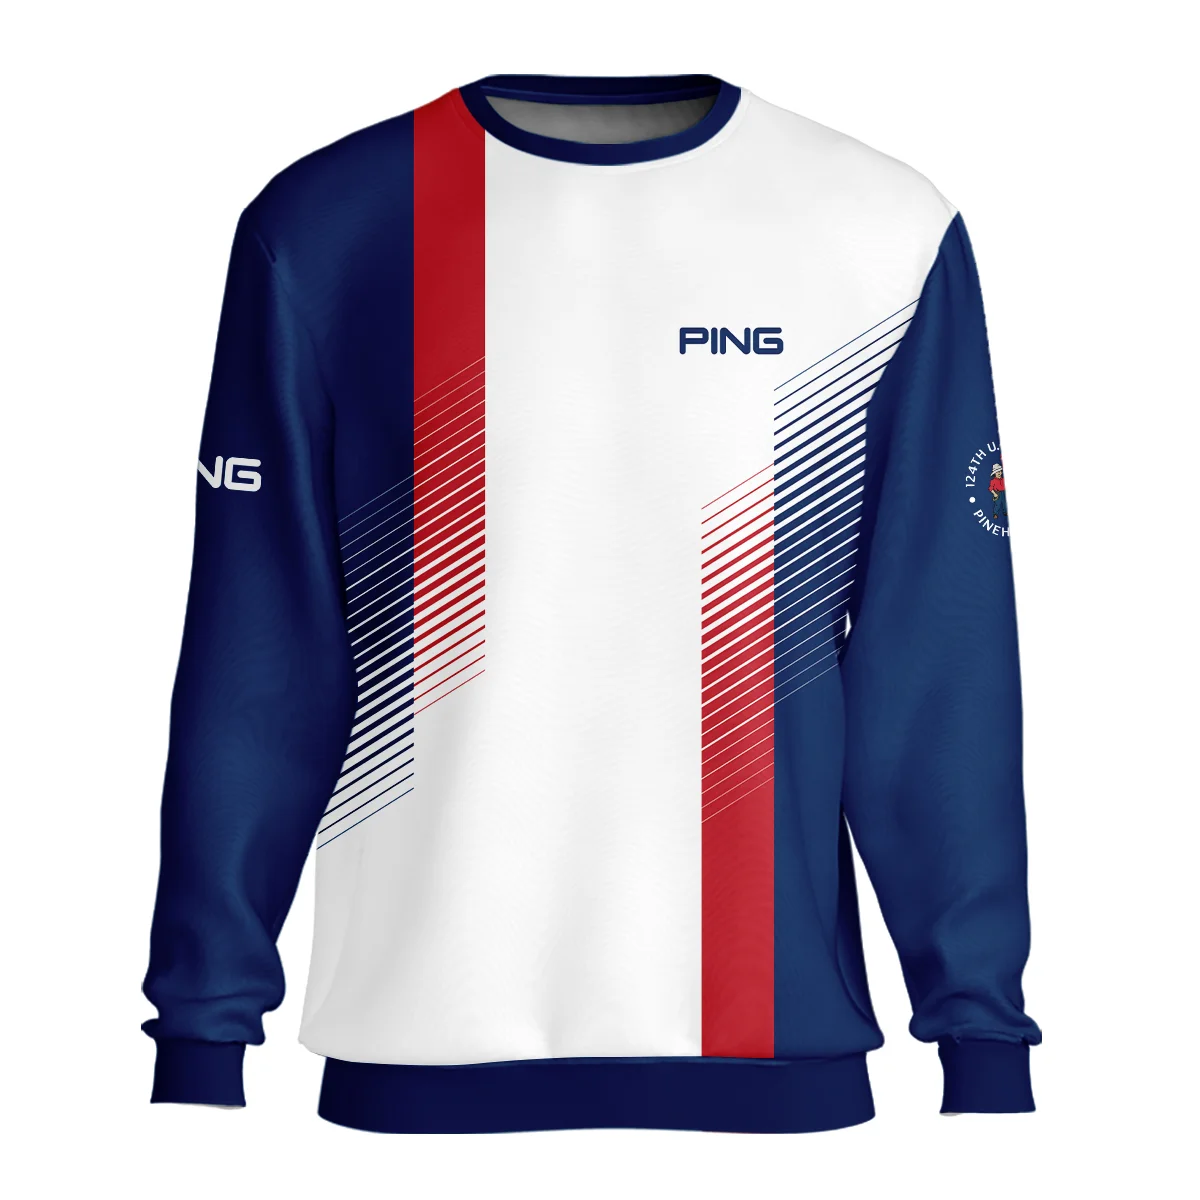 Sport Ping 124th U.S. Open Pinehurst Golf Unisex Sweatshirt Blue Red Striped Pattern White All Over Print Sweatshirt